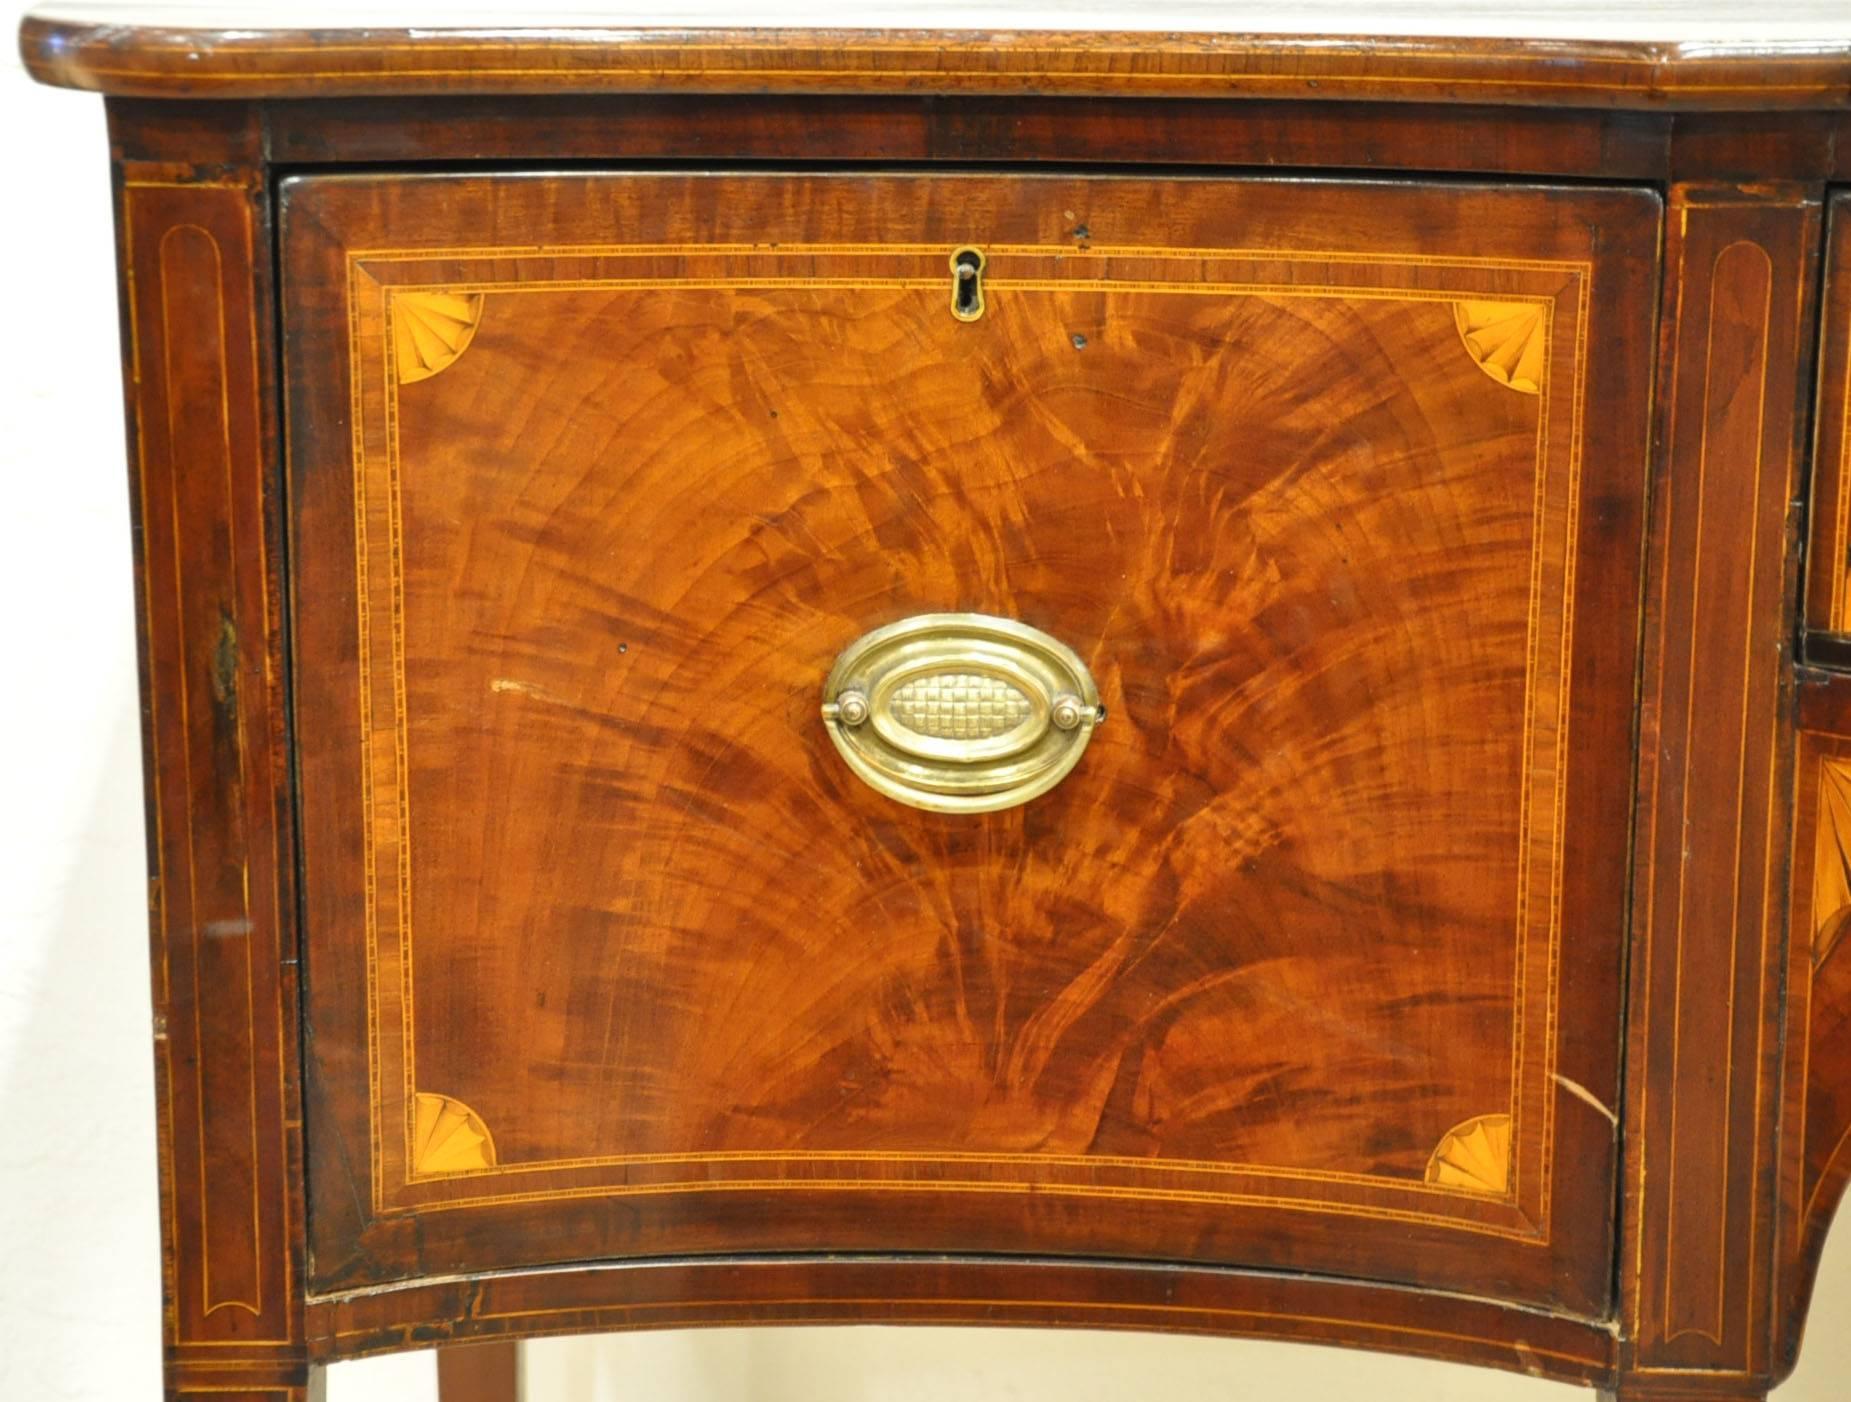 George III 18th Century English Georgian Figured Mahogany Sideboard with Shaped Top